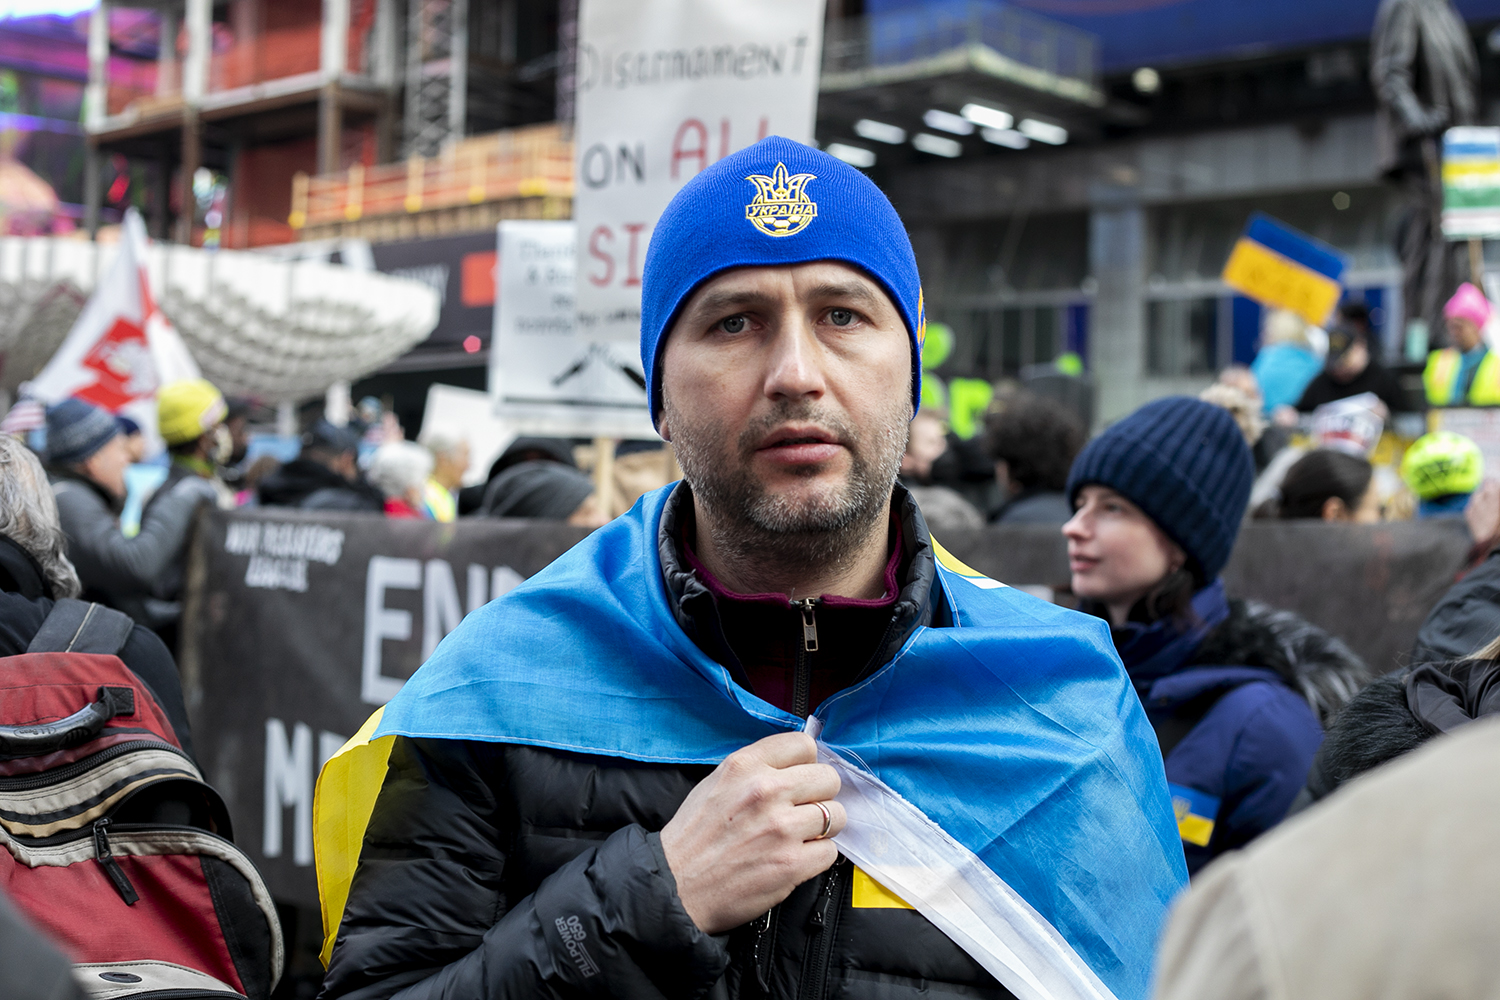 Ukraine War protest: Times Square